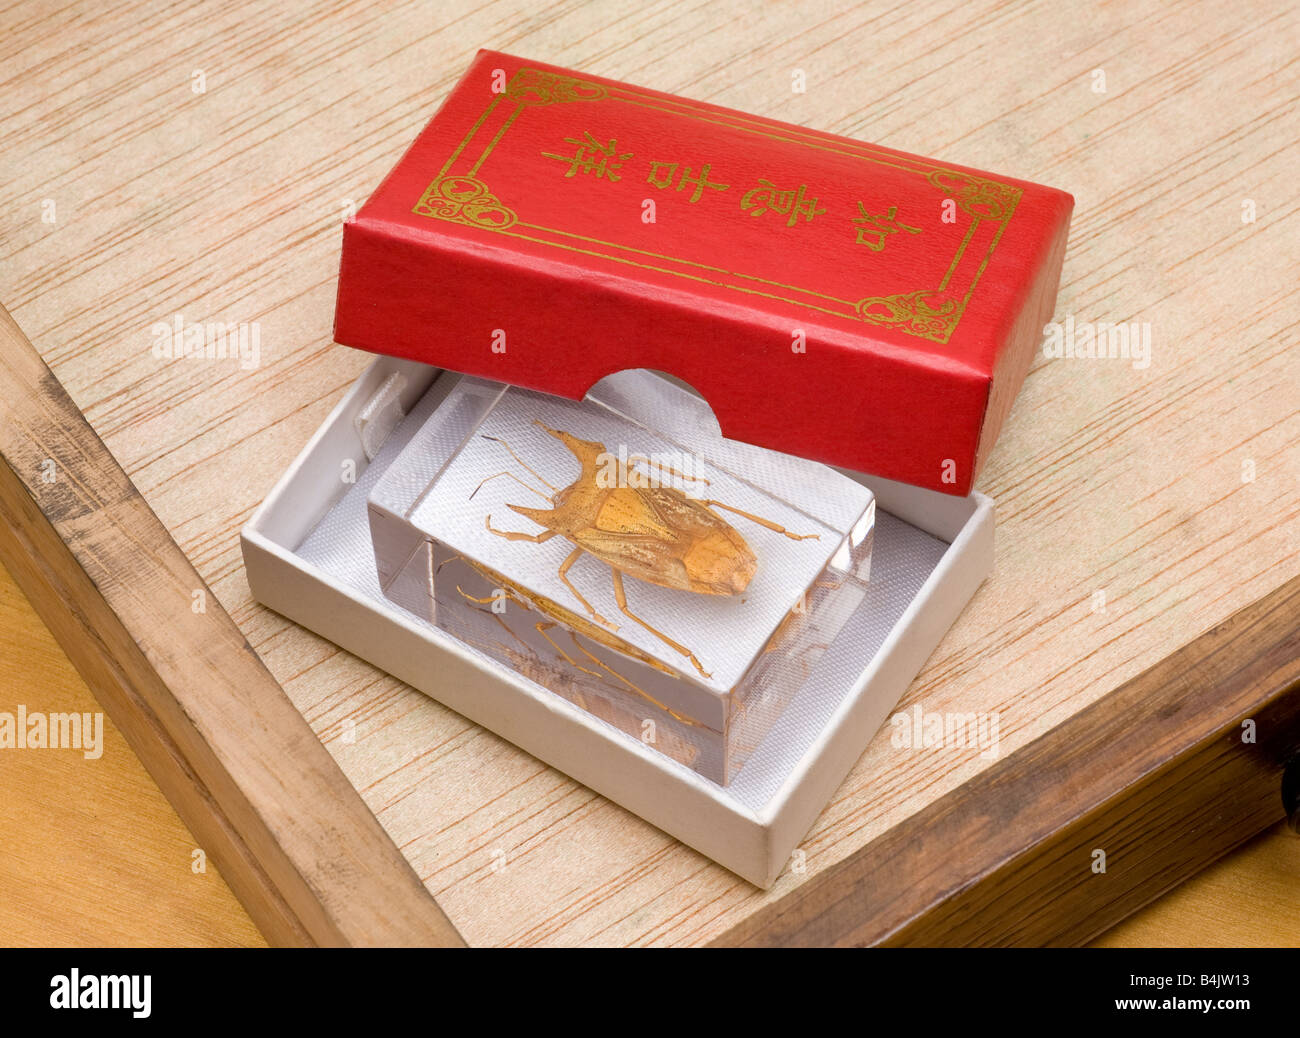 Golden fétidas Bug, Cressona divaricata, lucita resina incrustada, shield bug de China Foto de stock